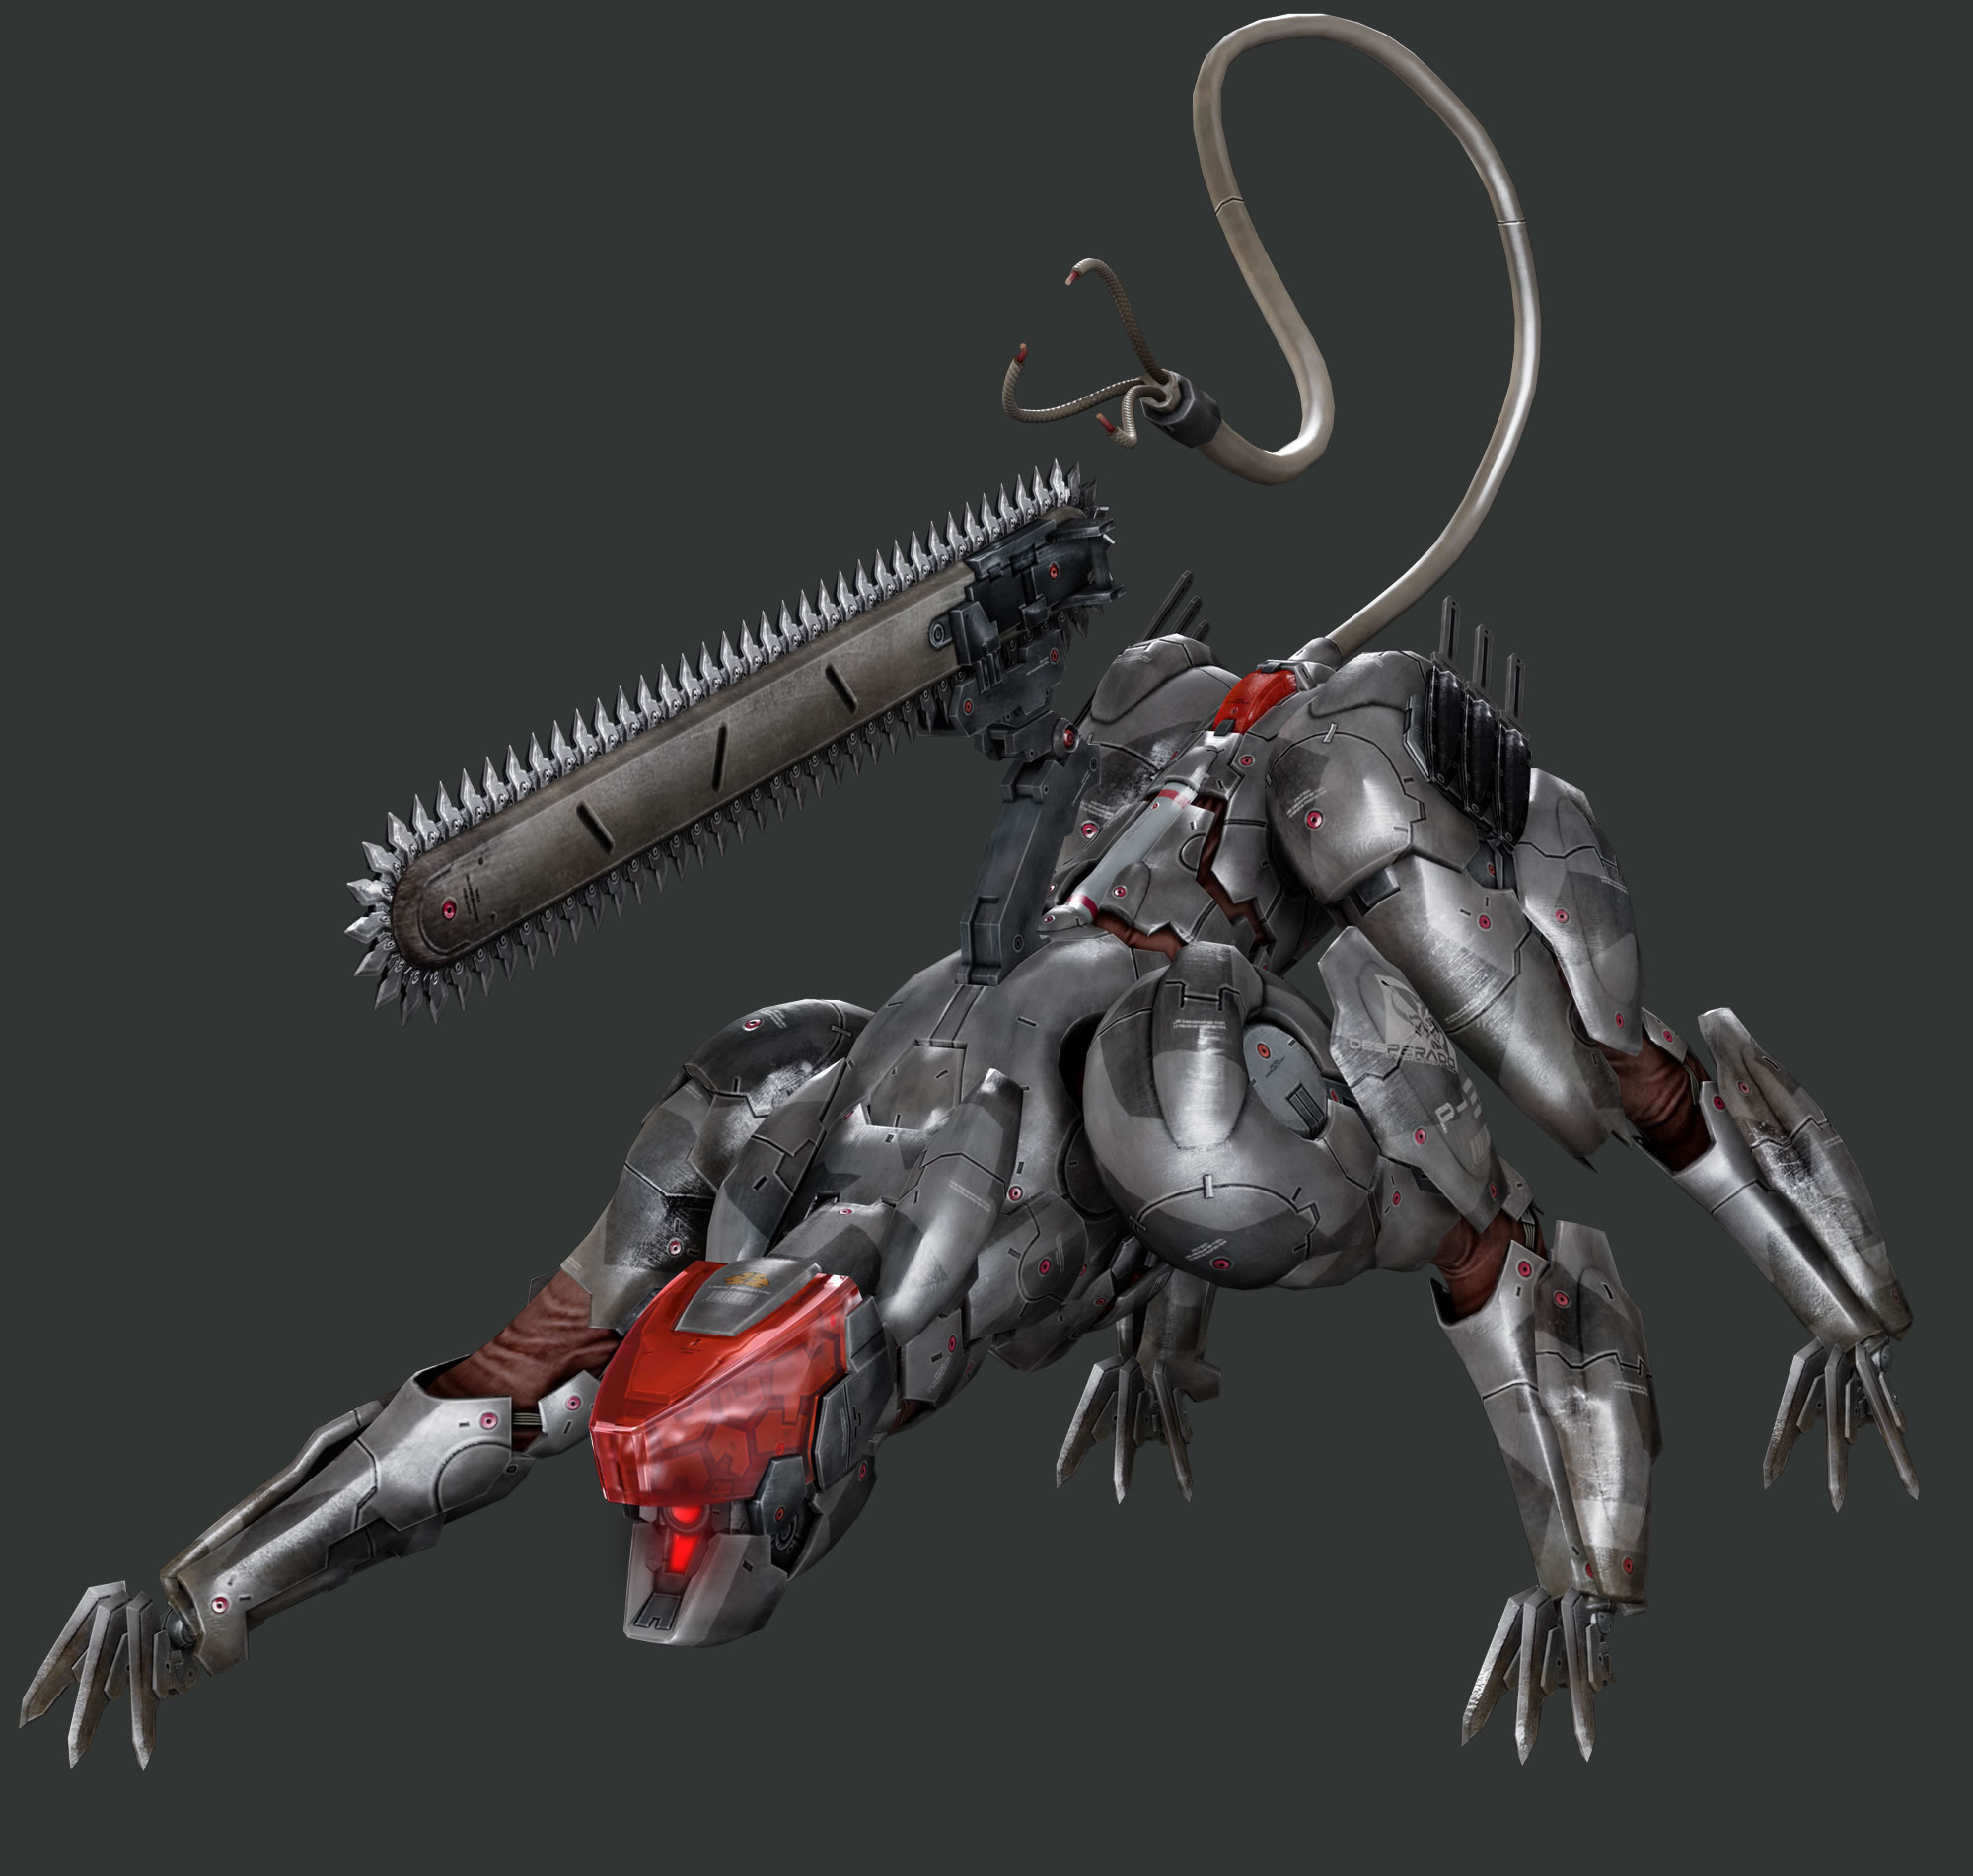 LQ-84i aka Bladewolf de Metal Gear Rising Revengeance